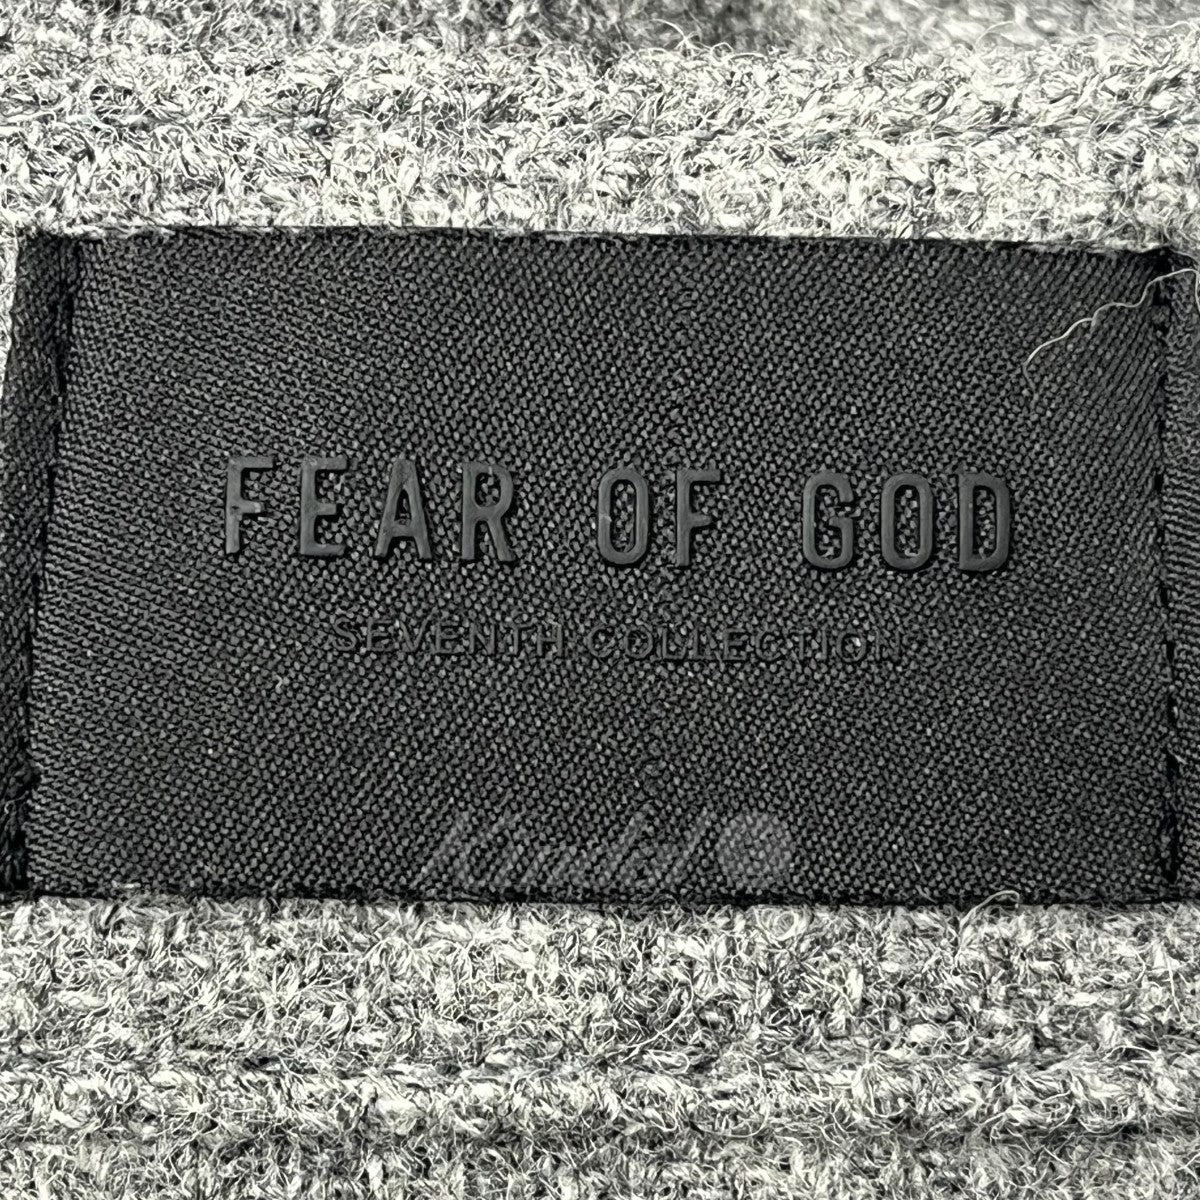 FEAR OF GOD(フィアオブゴッド) SEVENTH COLLECTION ジップアップ ...